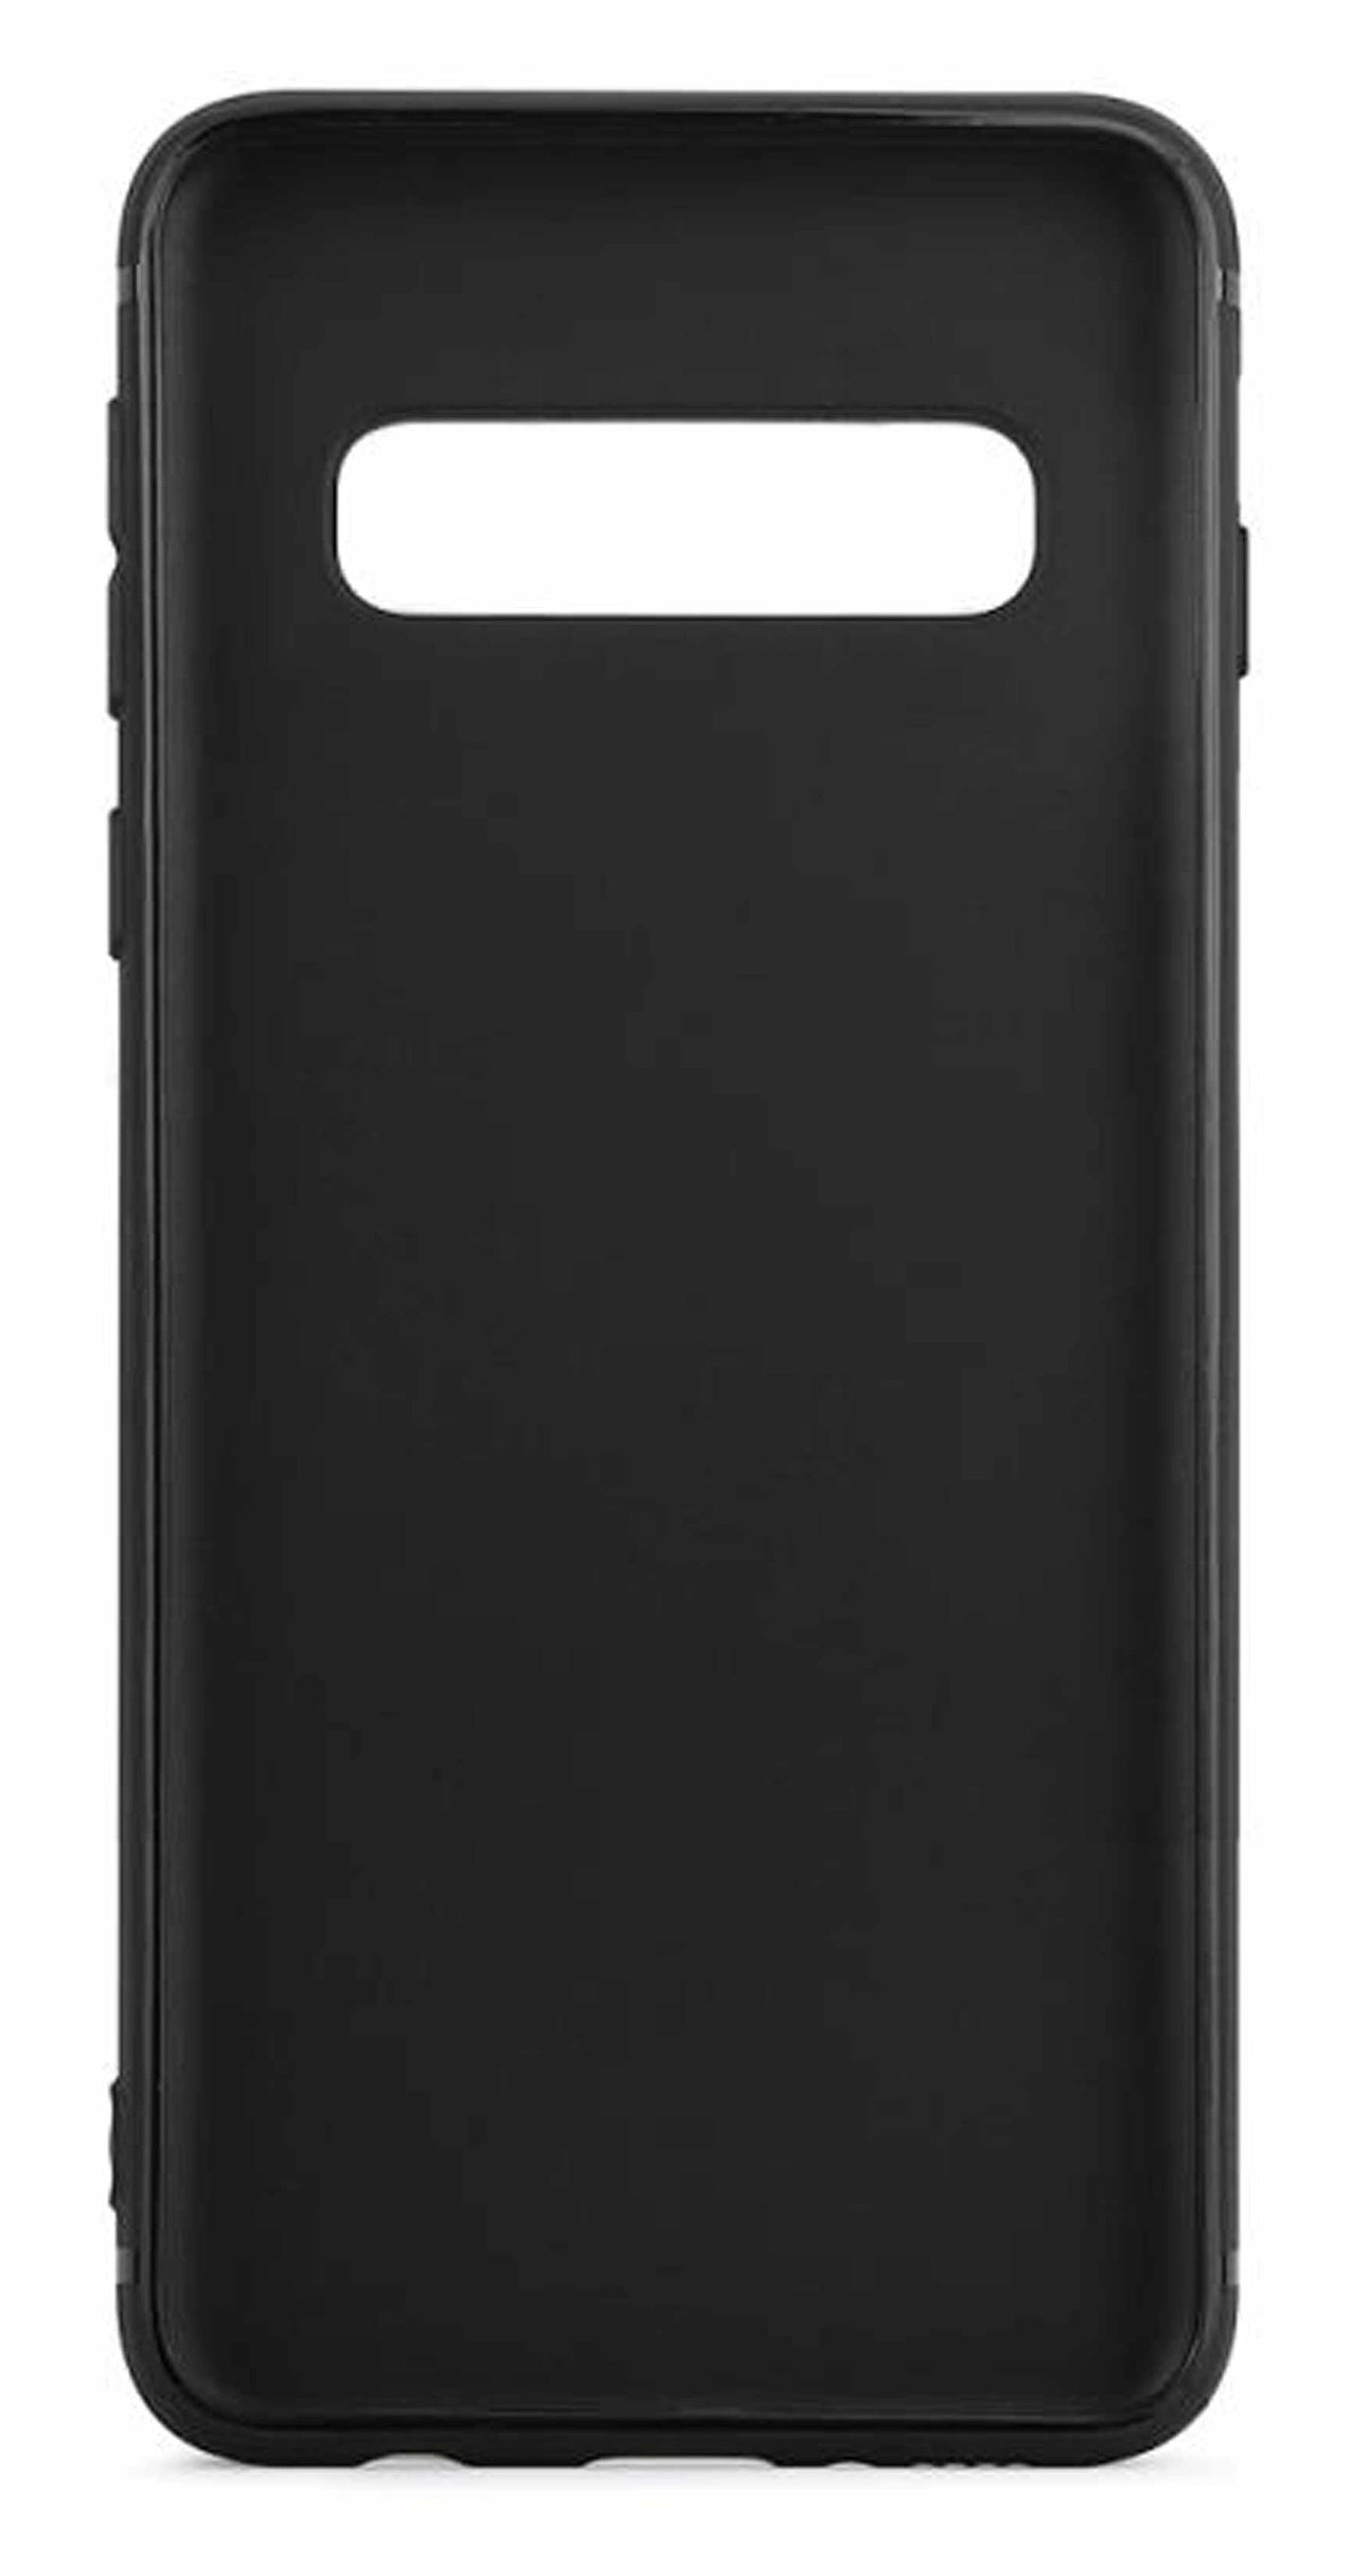 Gel Skin Case Black for Samsung Galaxy S10+